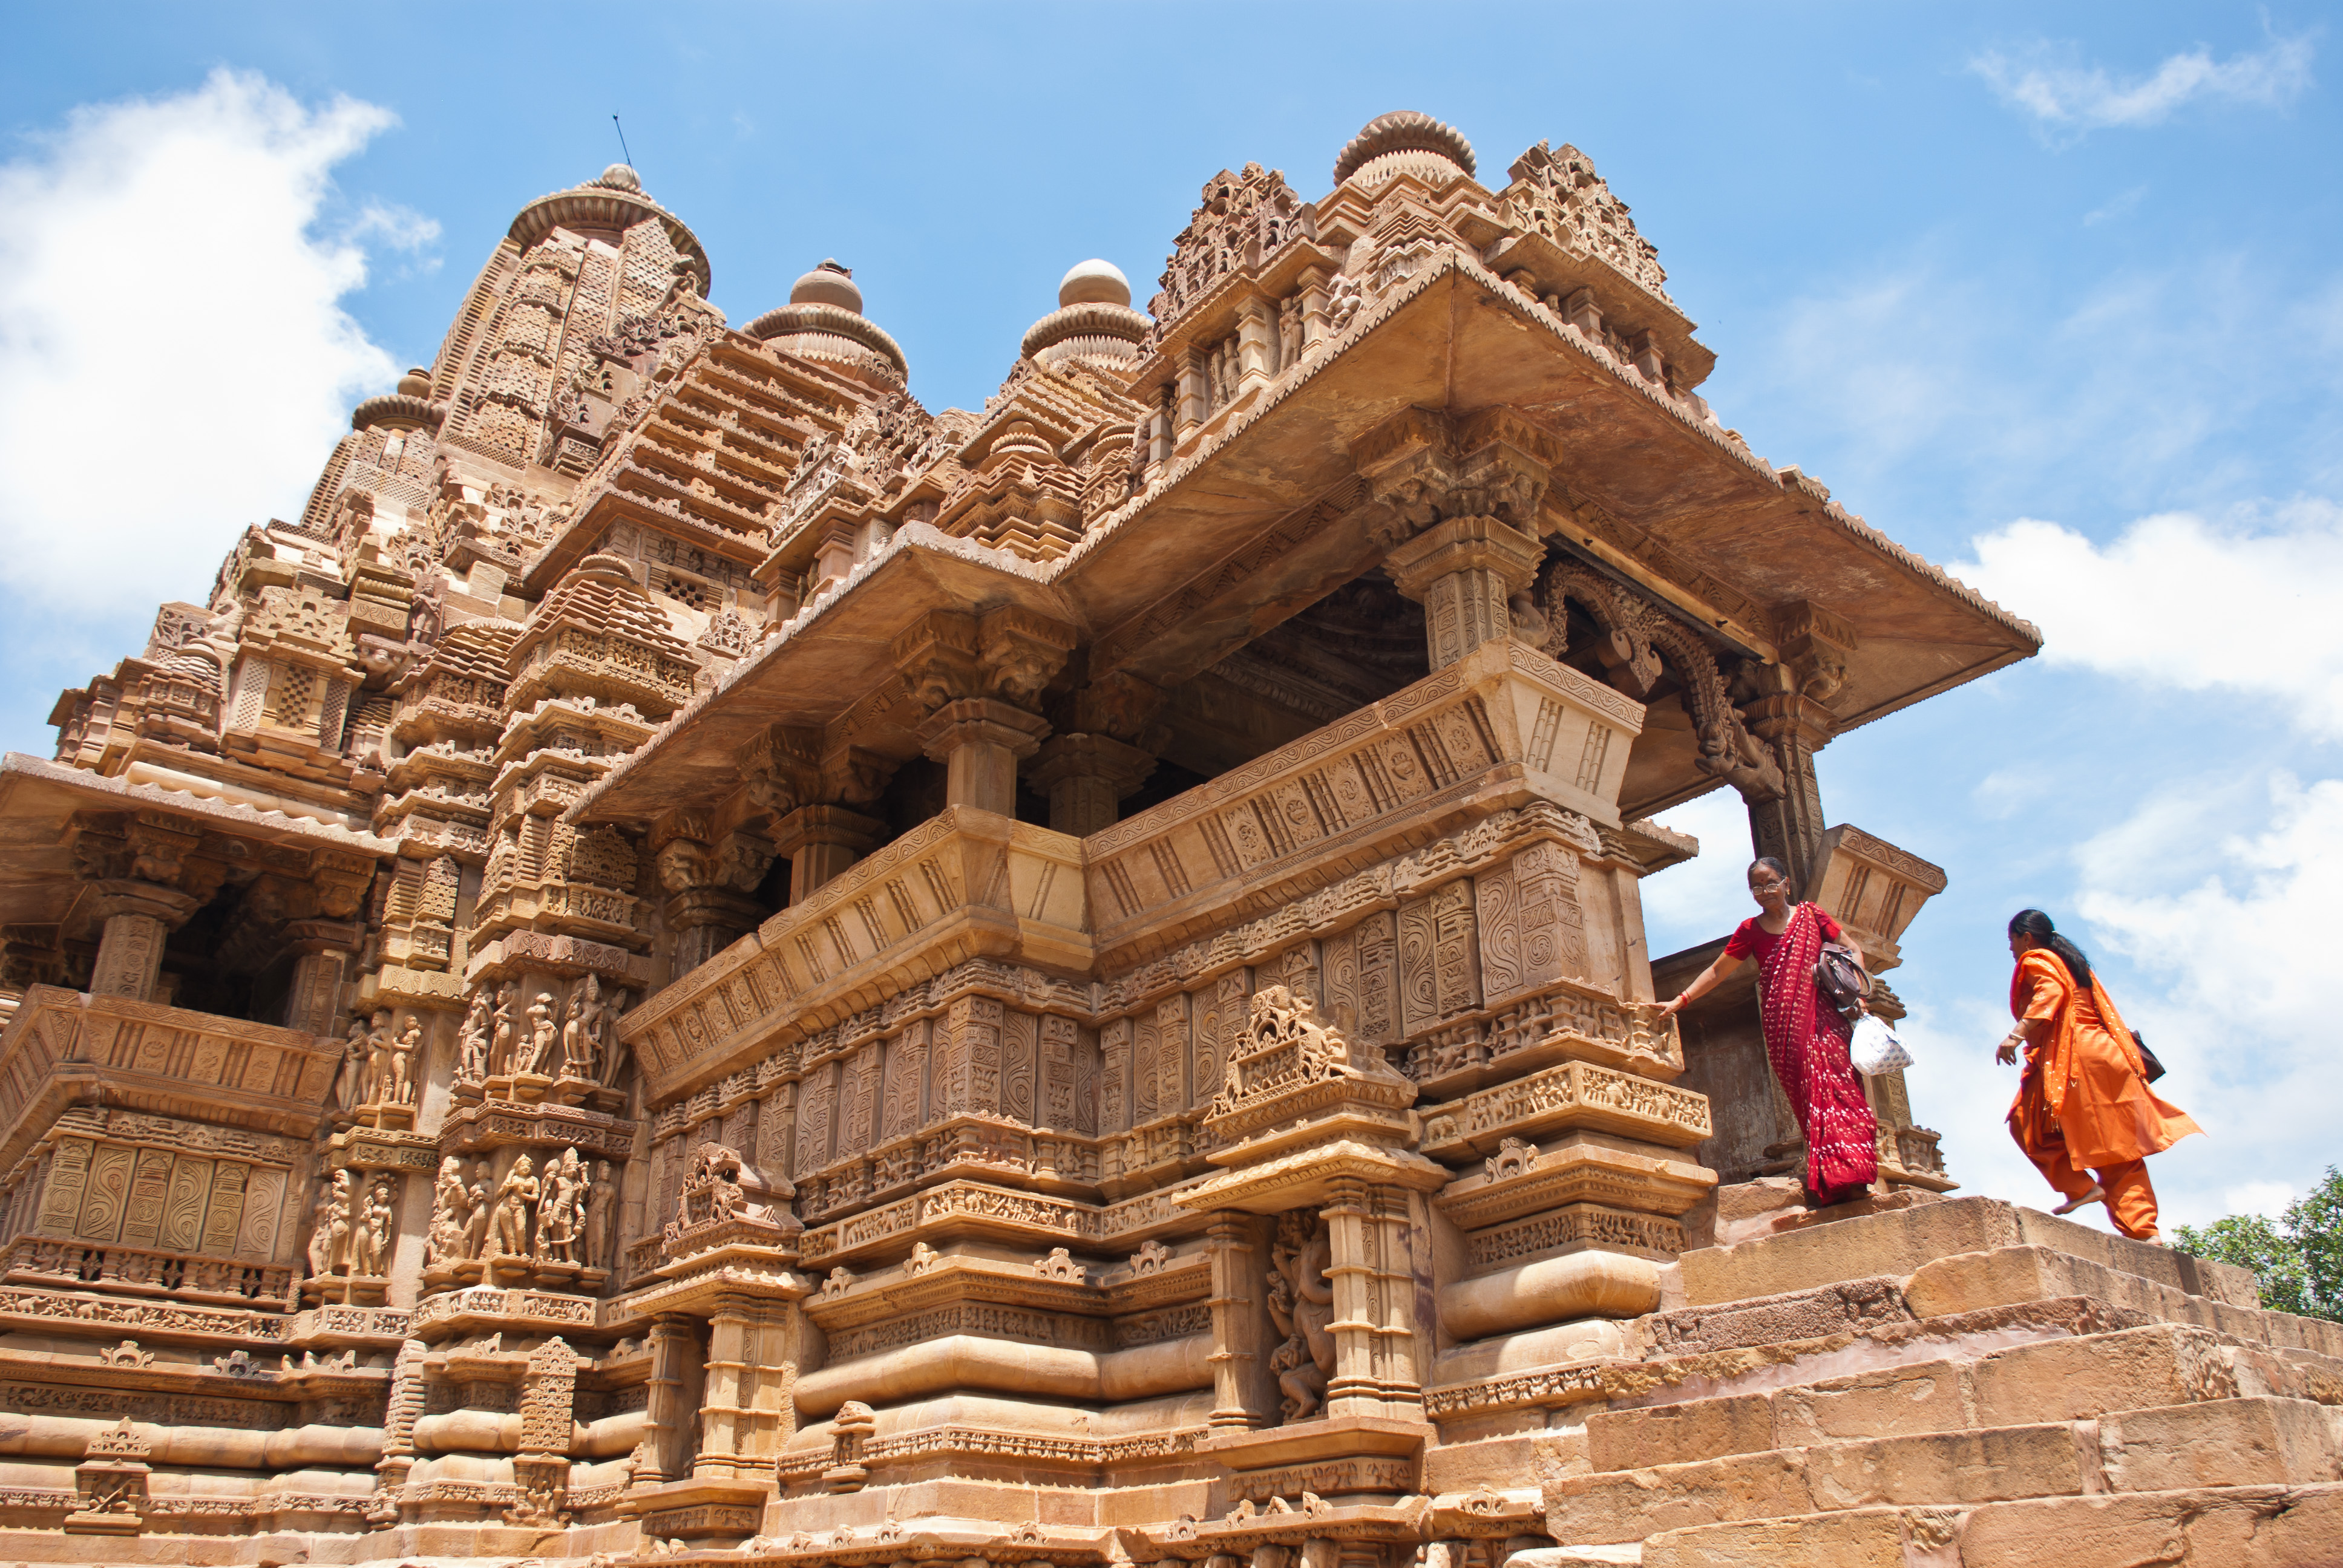 Entrance to the first Mandapa, Lakshmana Temple, Khajuraho, Chhatarpur District, Madhya Pradesh, India, dedicated 954 (photo: <a href = "https://commons.wikimedia.org/wiki/File:Lakshmana_Temple_17.jpg" target = " _blank "> Antoine Taveneaux </a>, CC BY-SA 3.0)